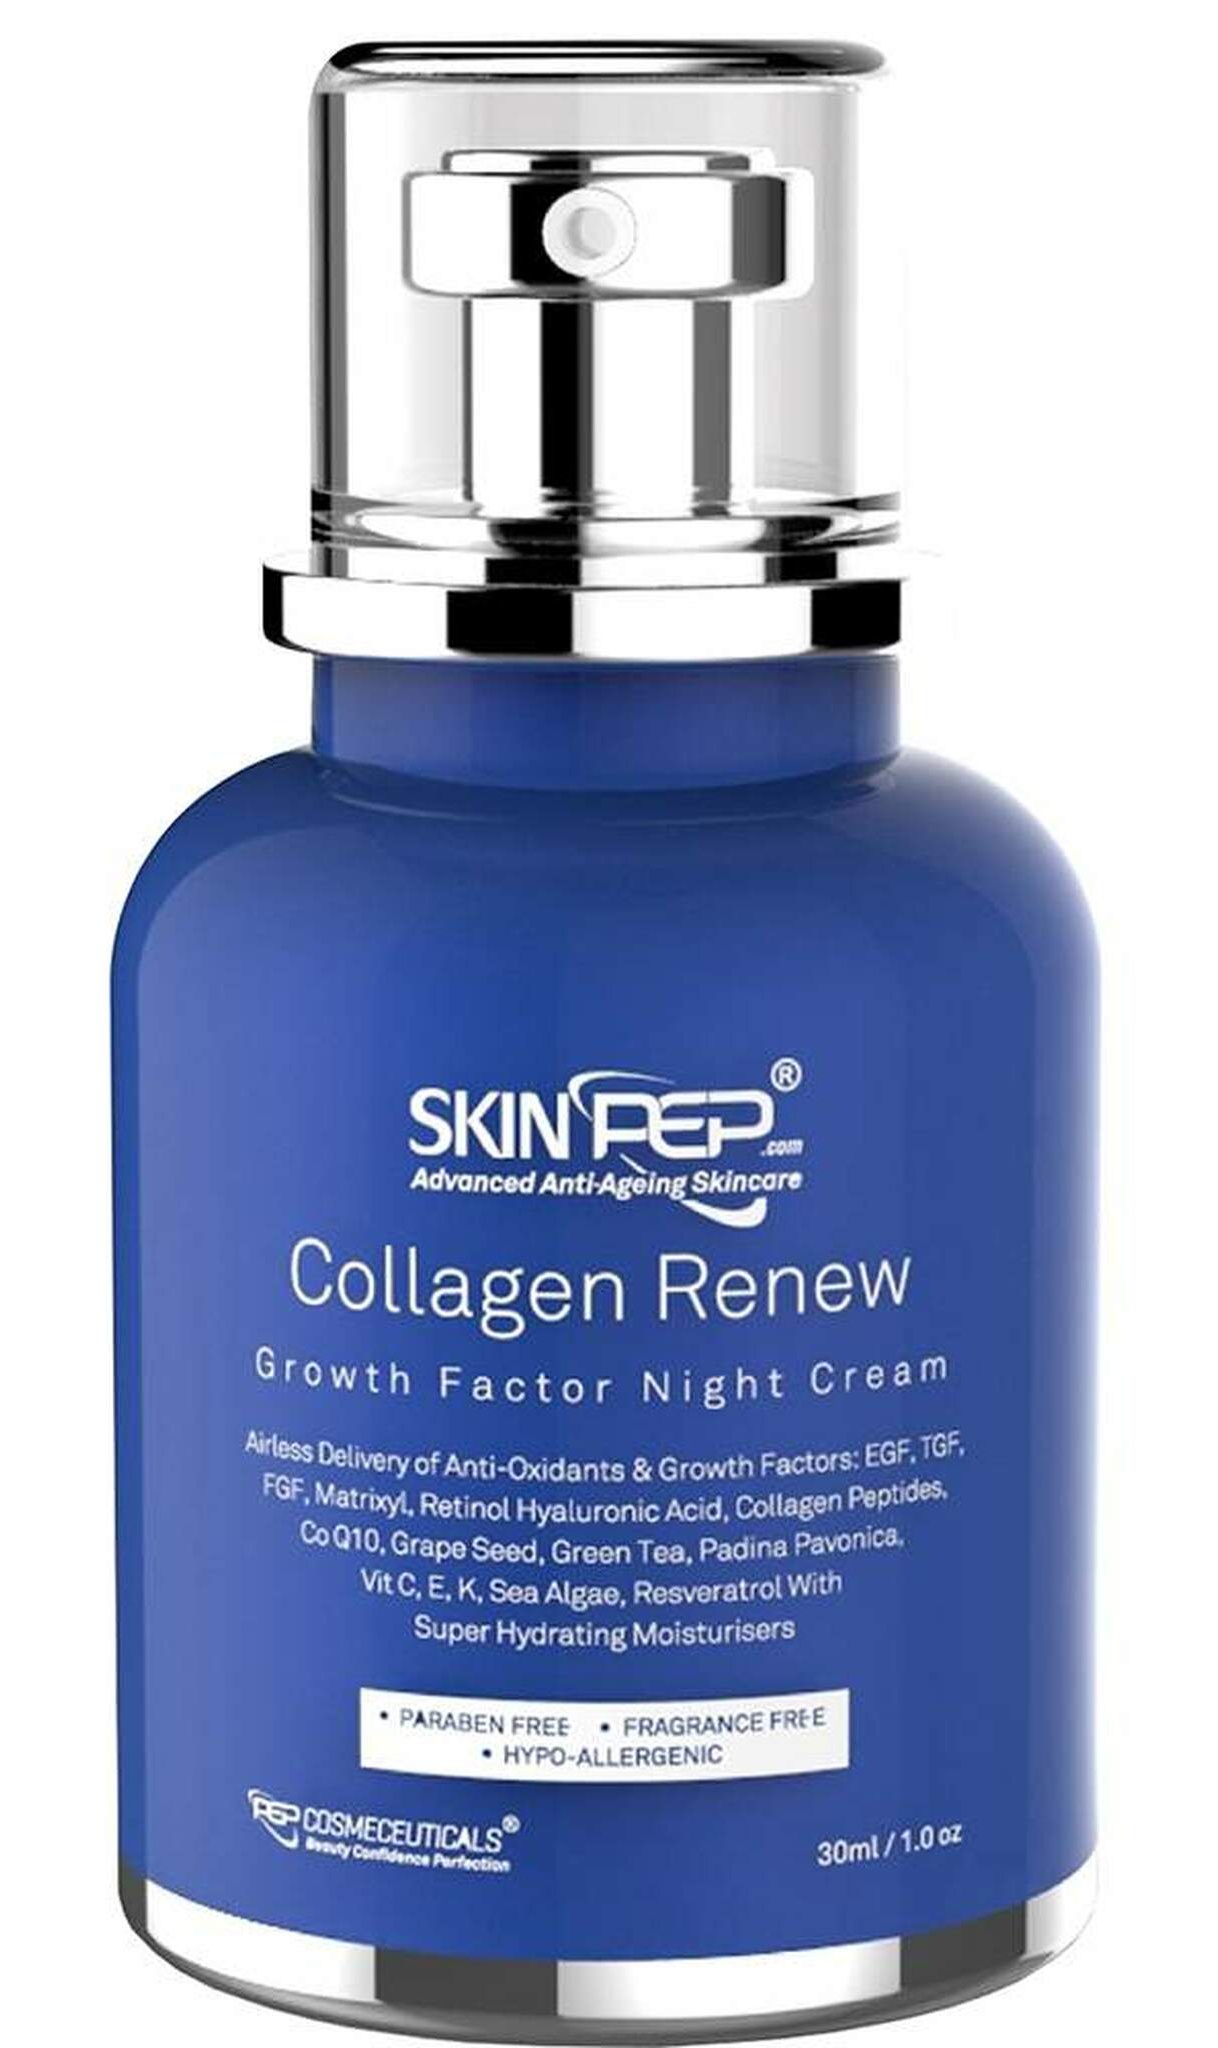 SkinPep Collagen Renew Growth Factor Night Cream